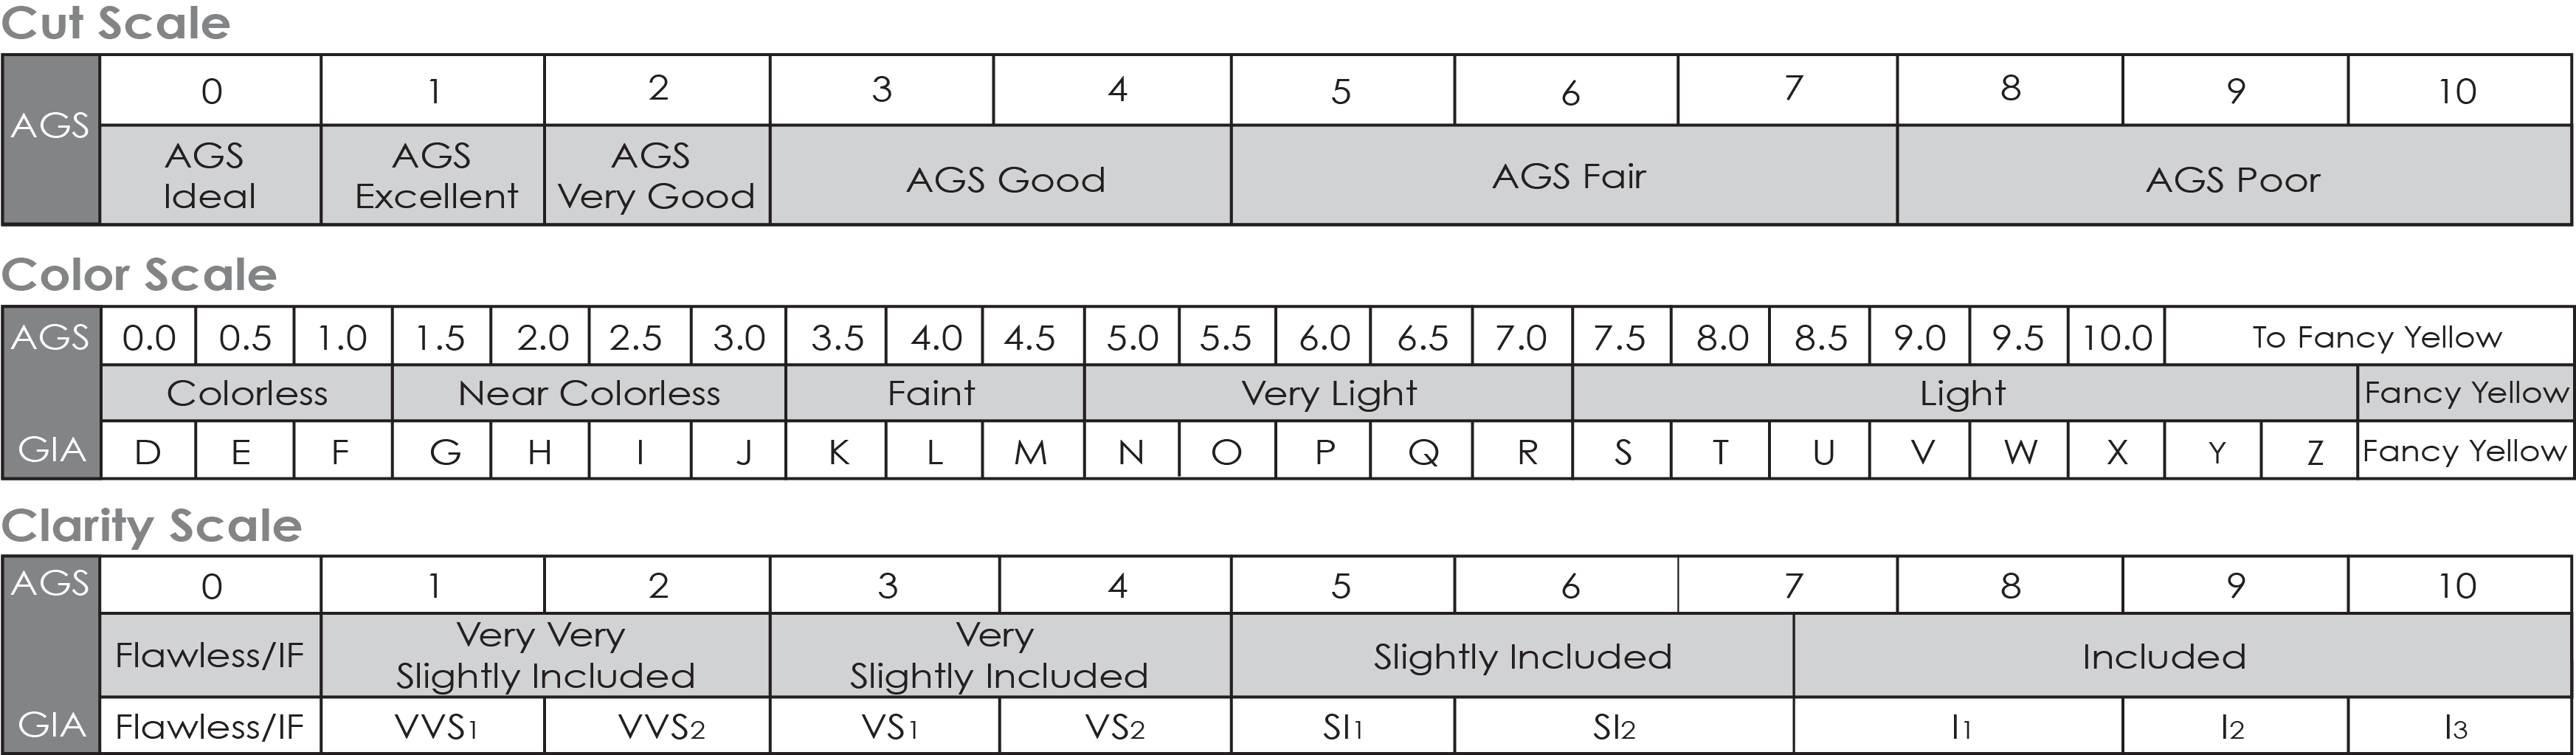 AGS Cut Scale